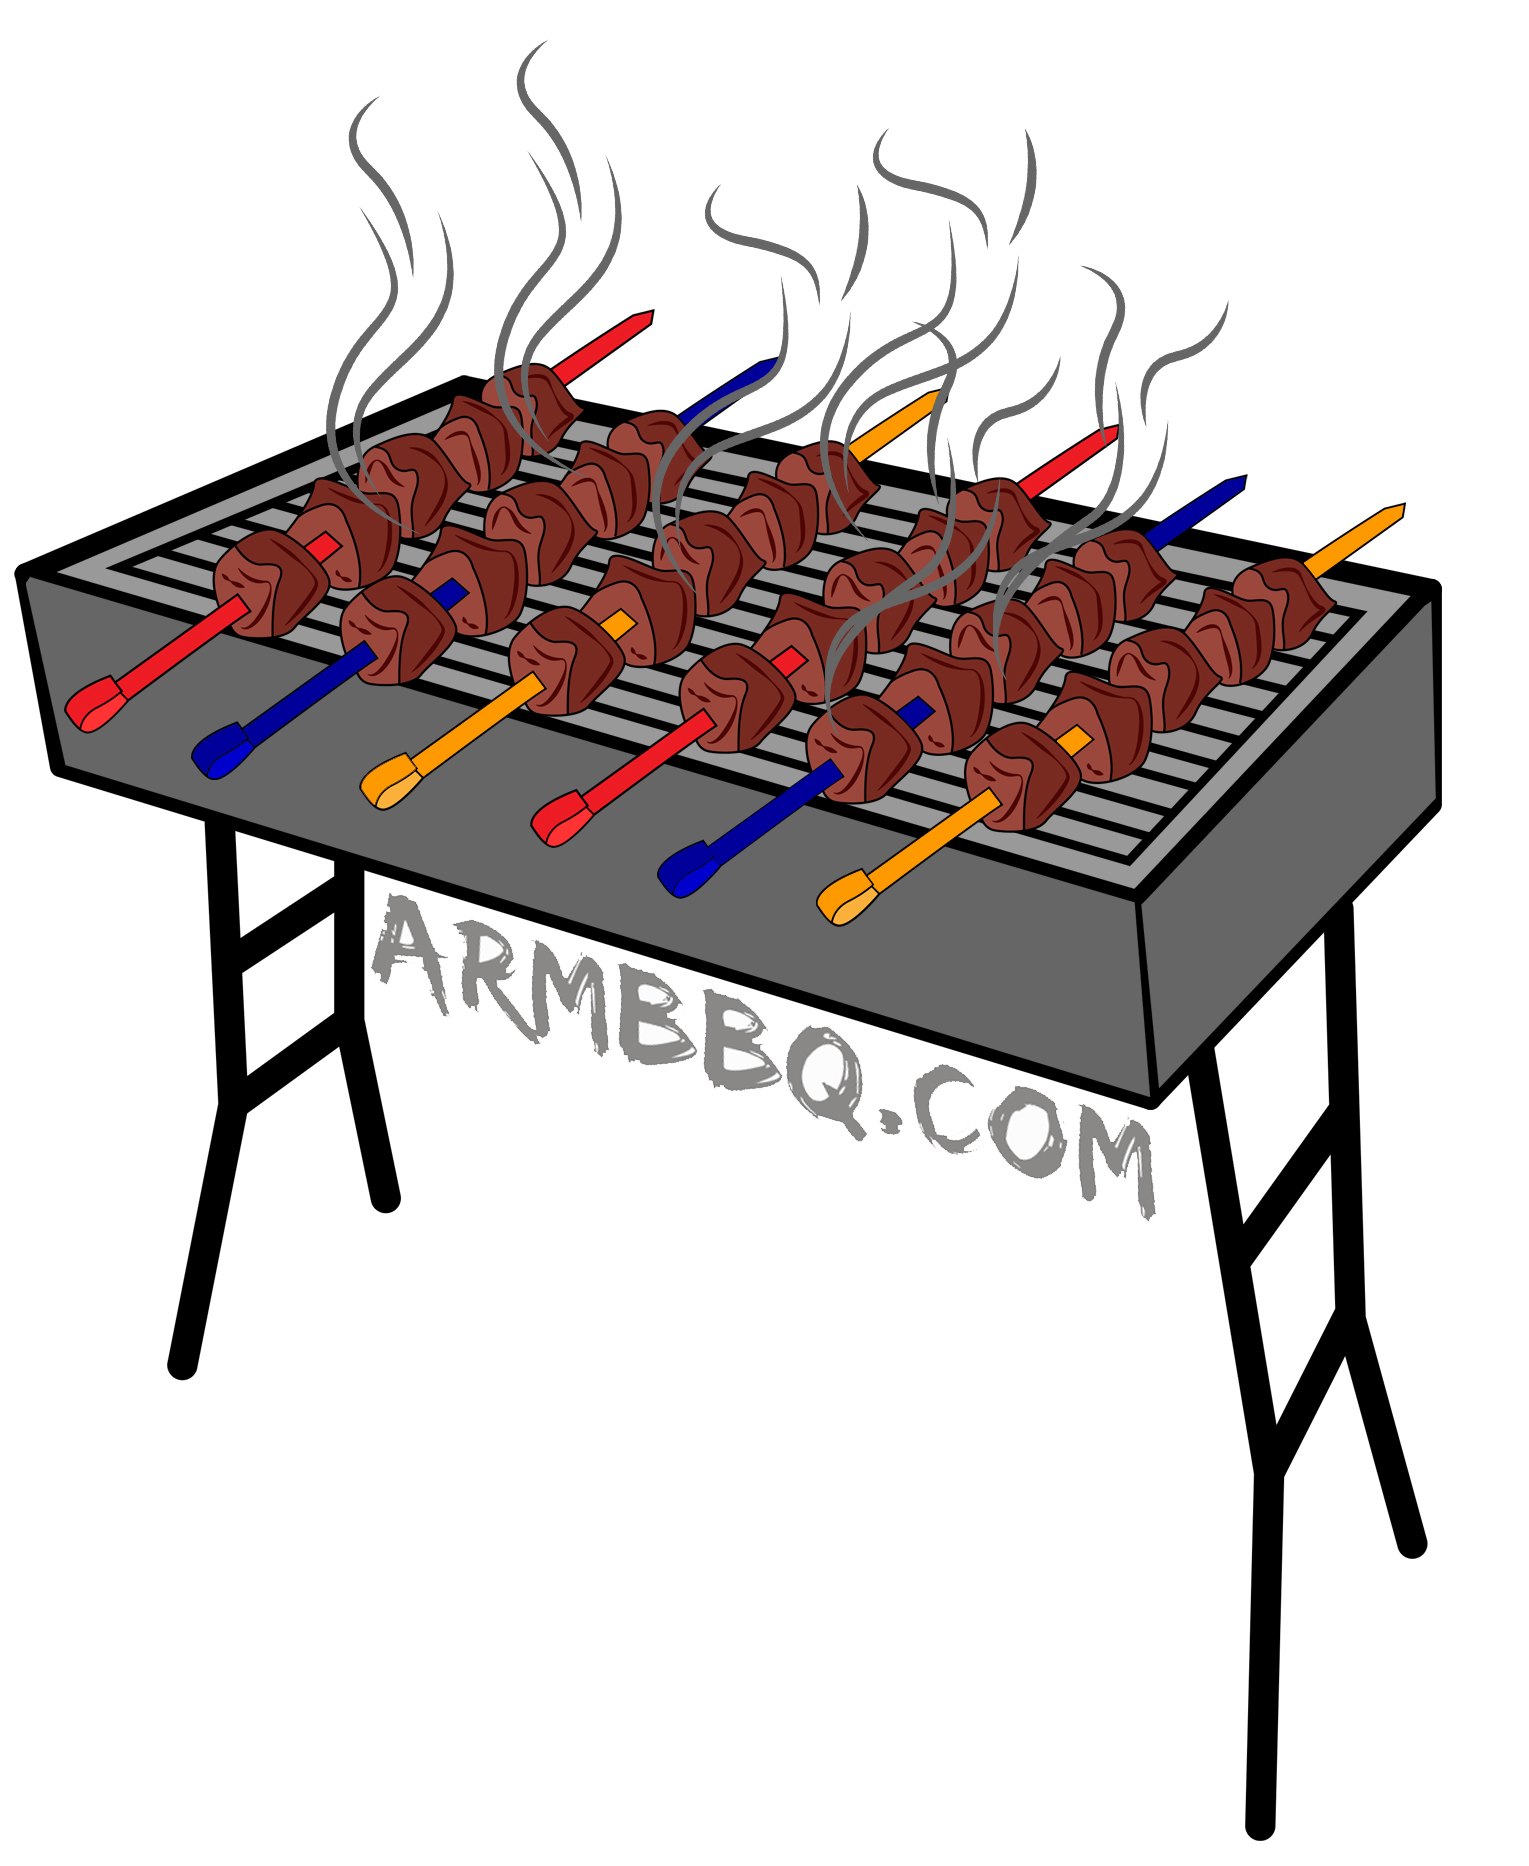 Armenian BBQ | How To Make Armenian/Persian Barbecue